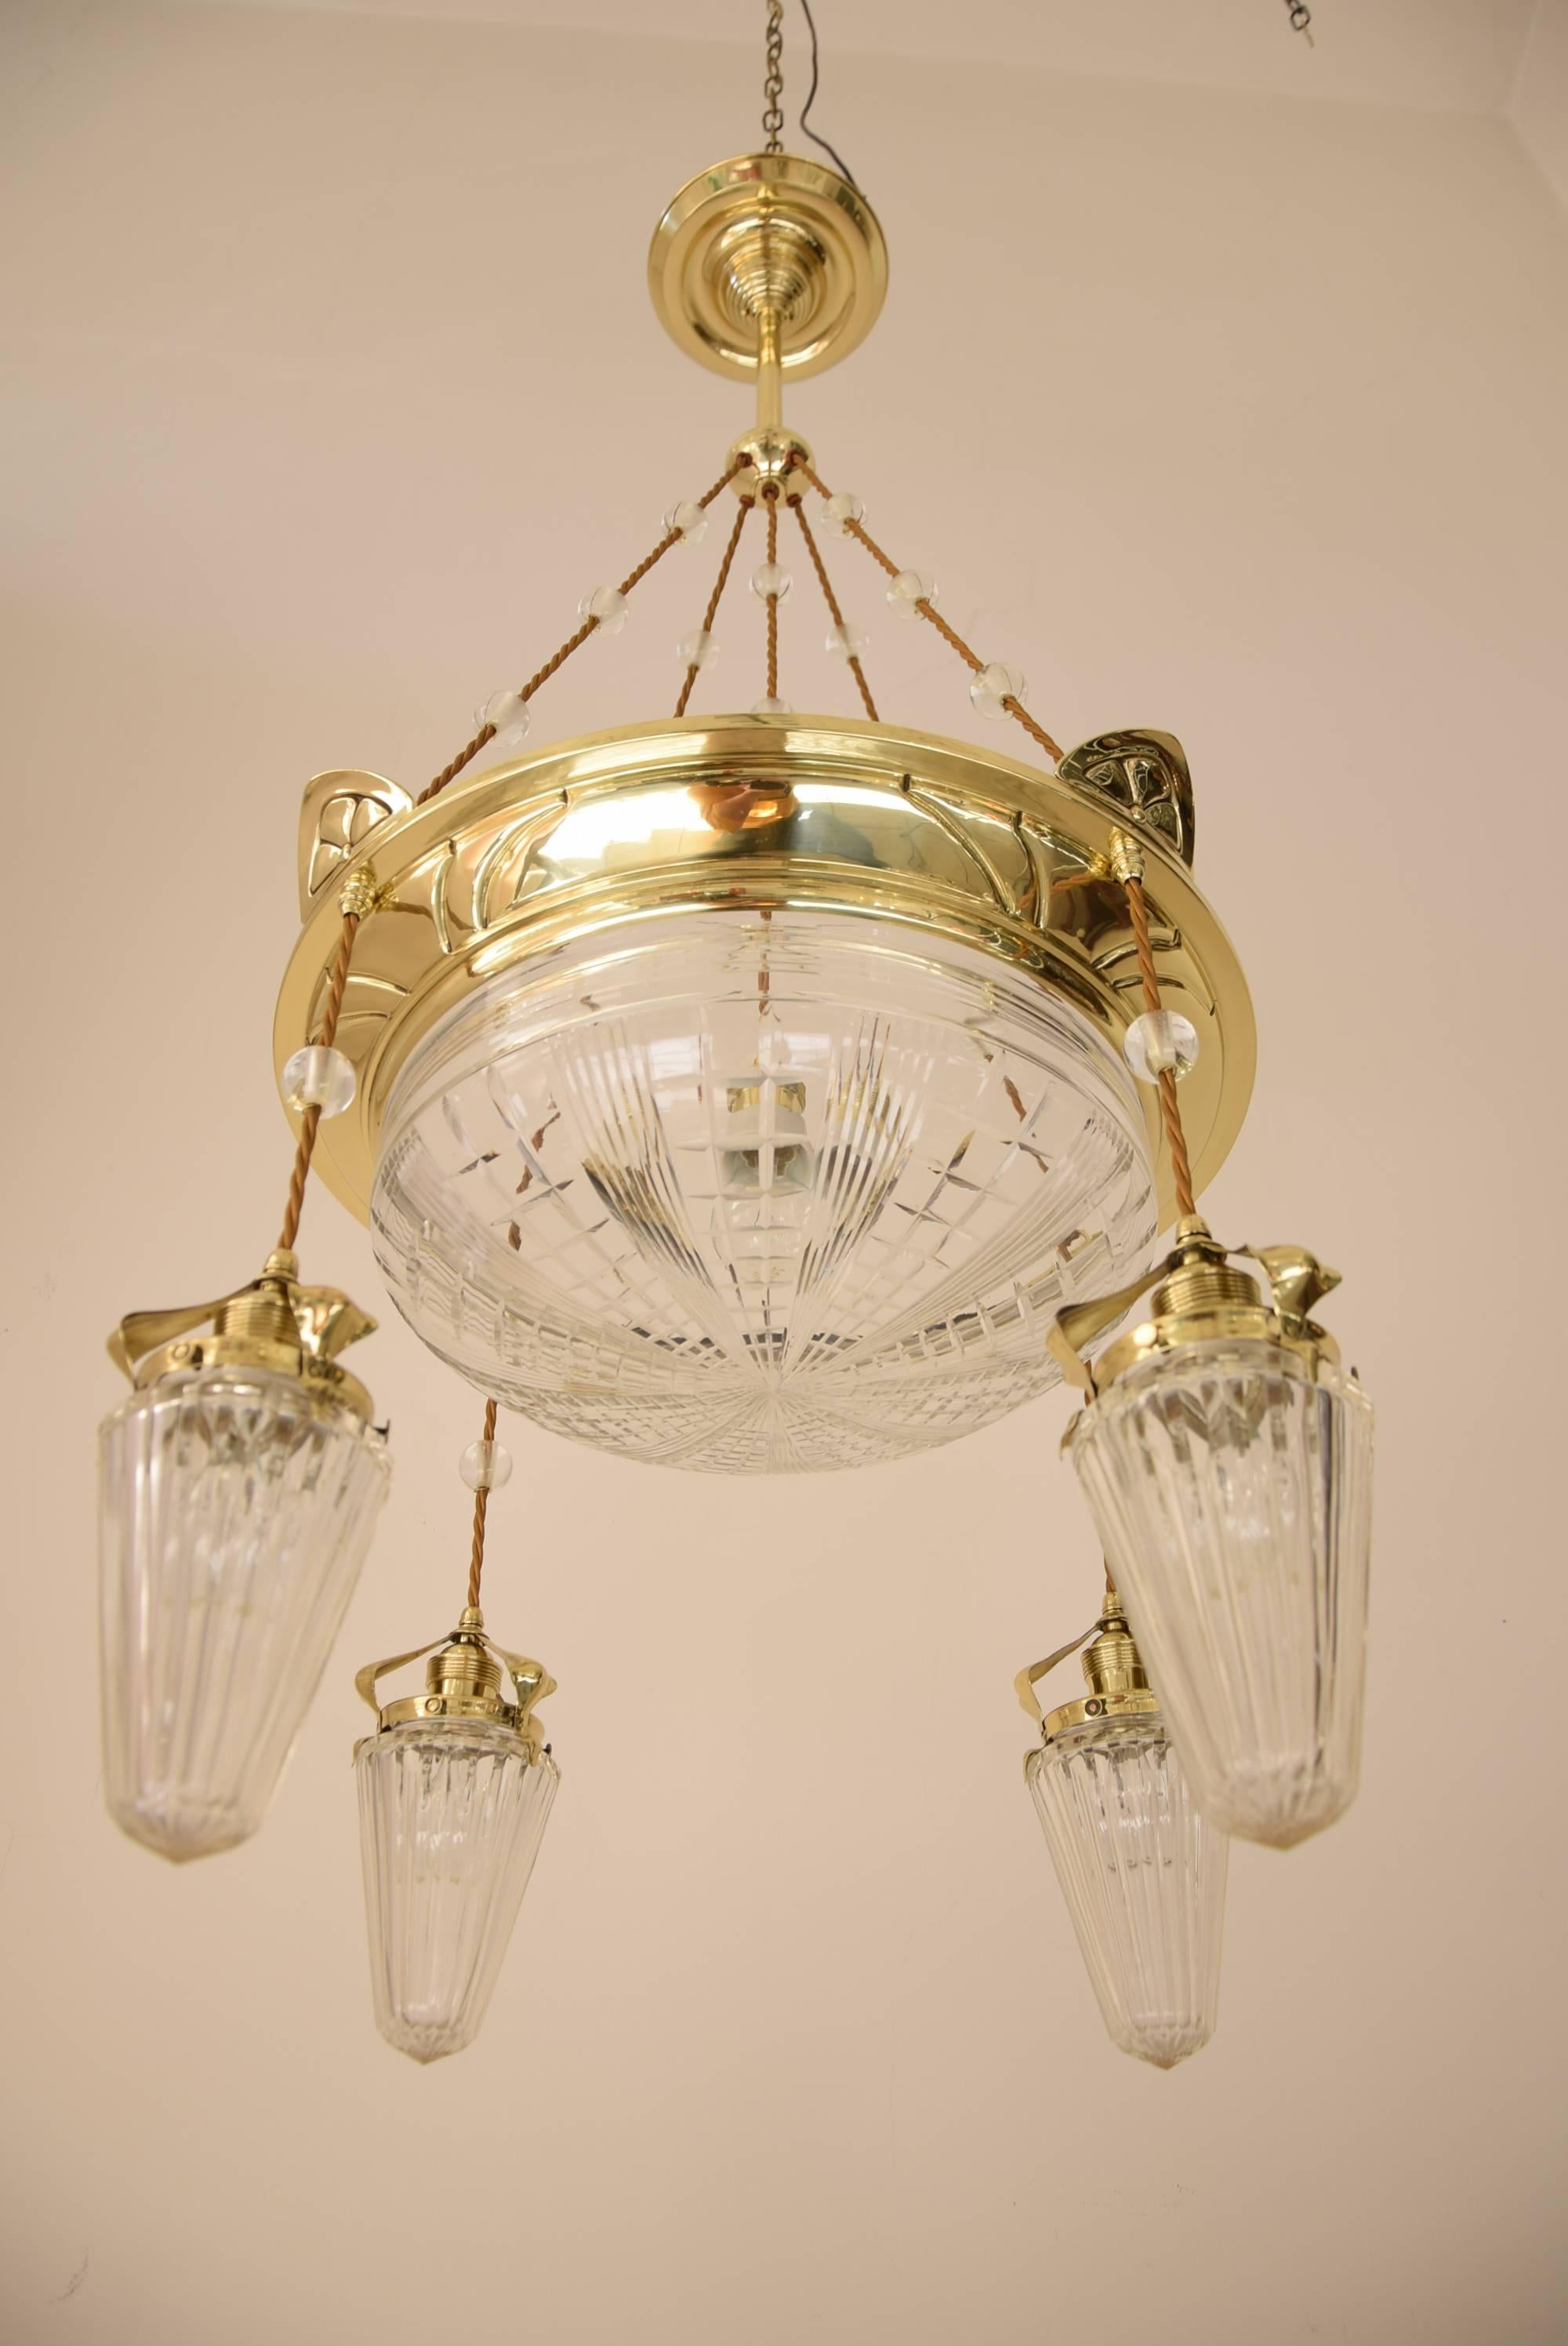 Amazing Jugendstil chandelier, circa 1910.
Original cut-glass and glass balls
polished and stove enameled.